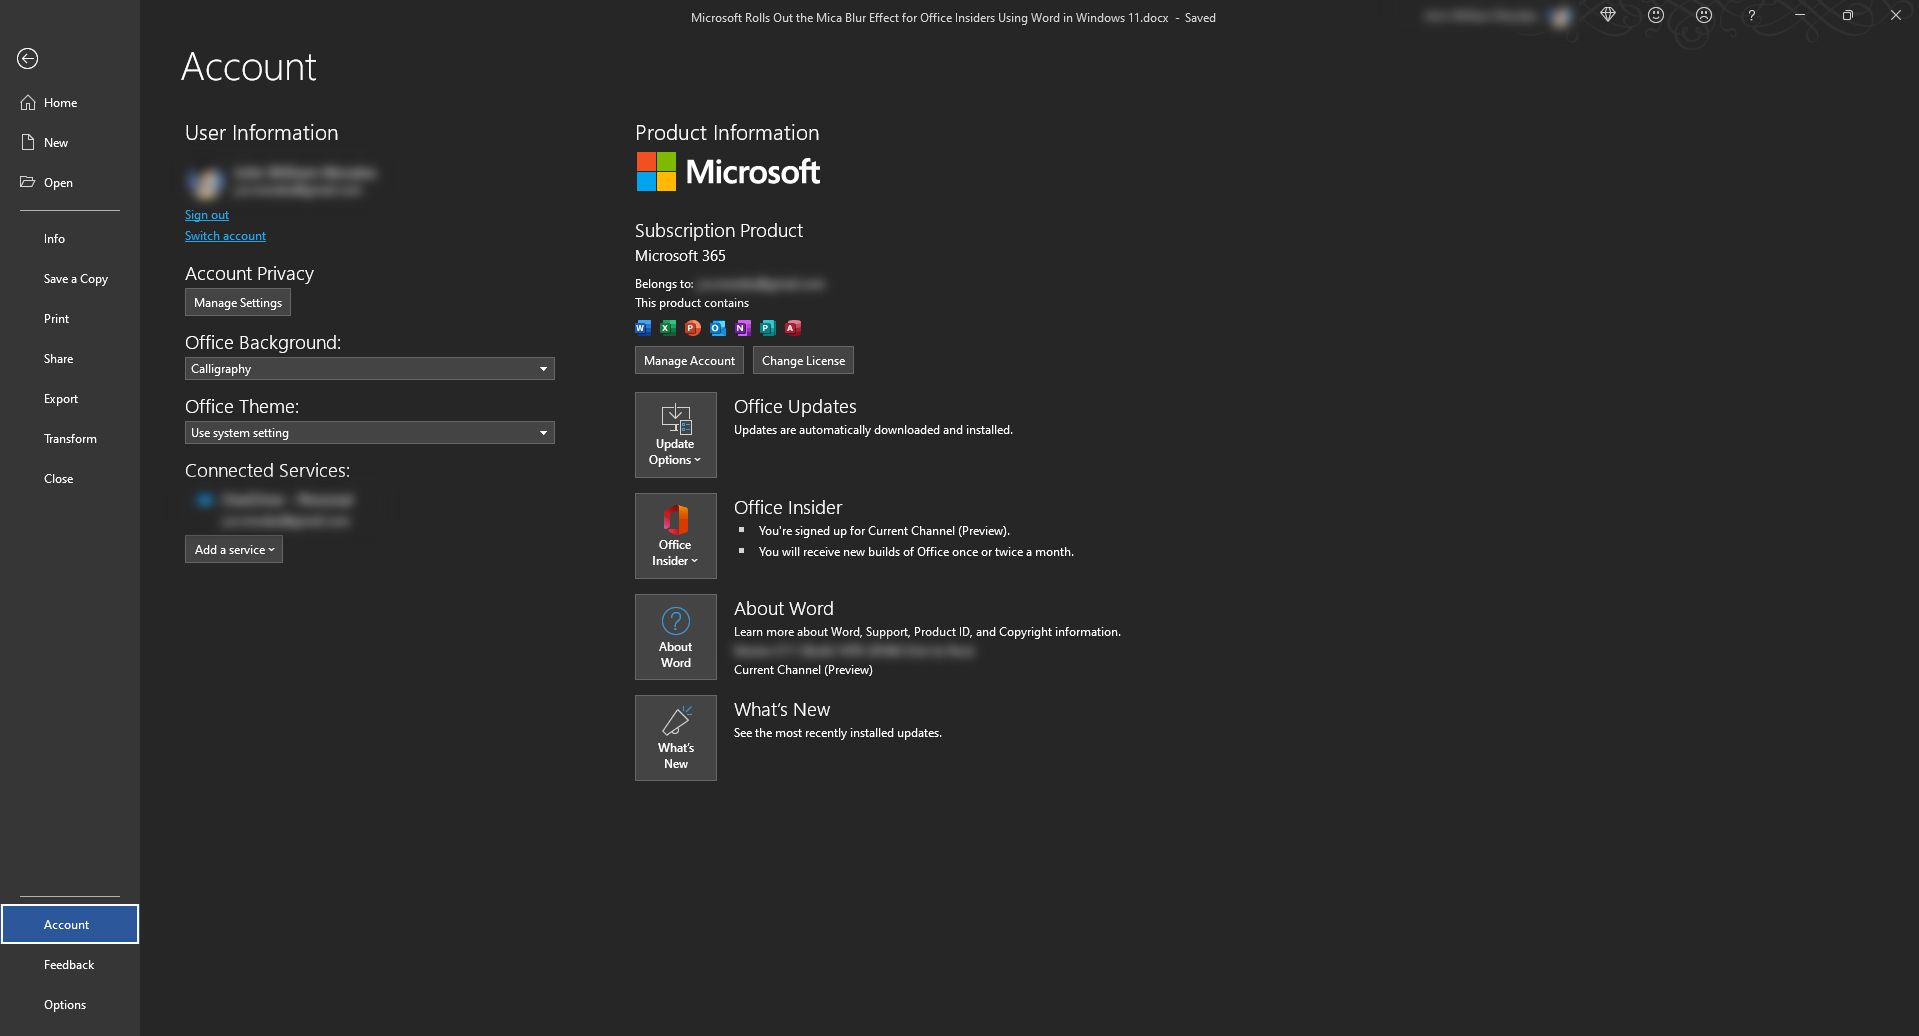 Microsoft Word Account window showing Office Insider status